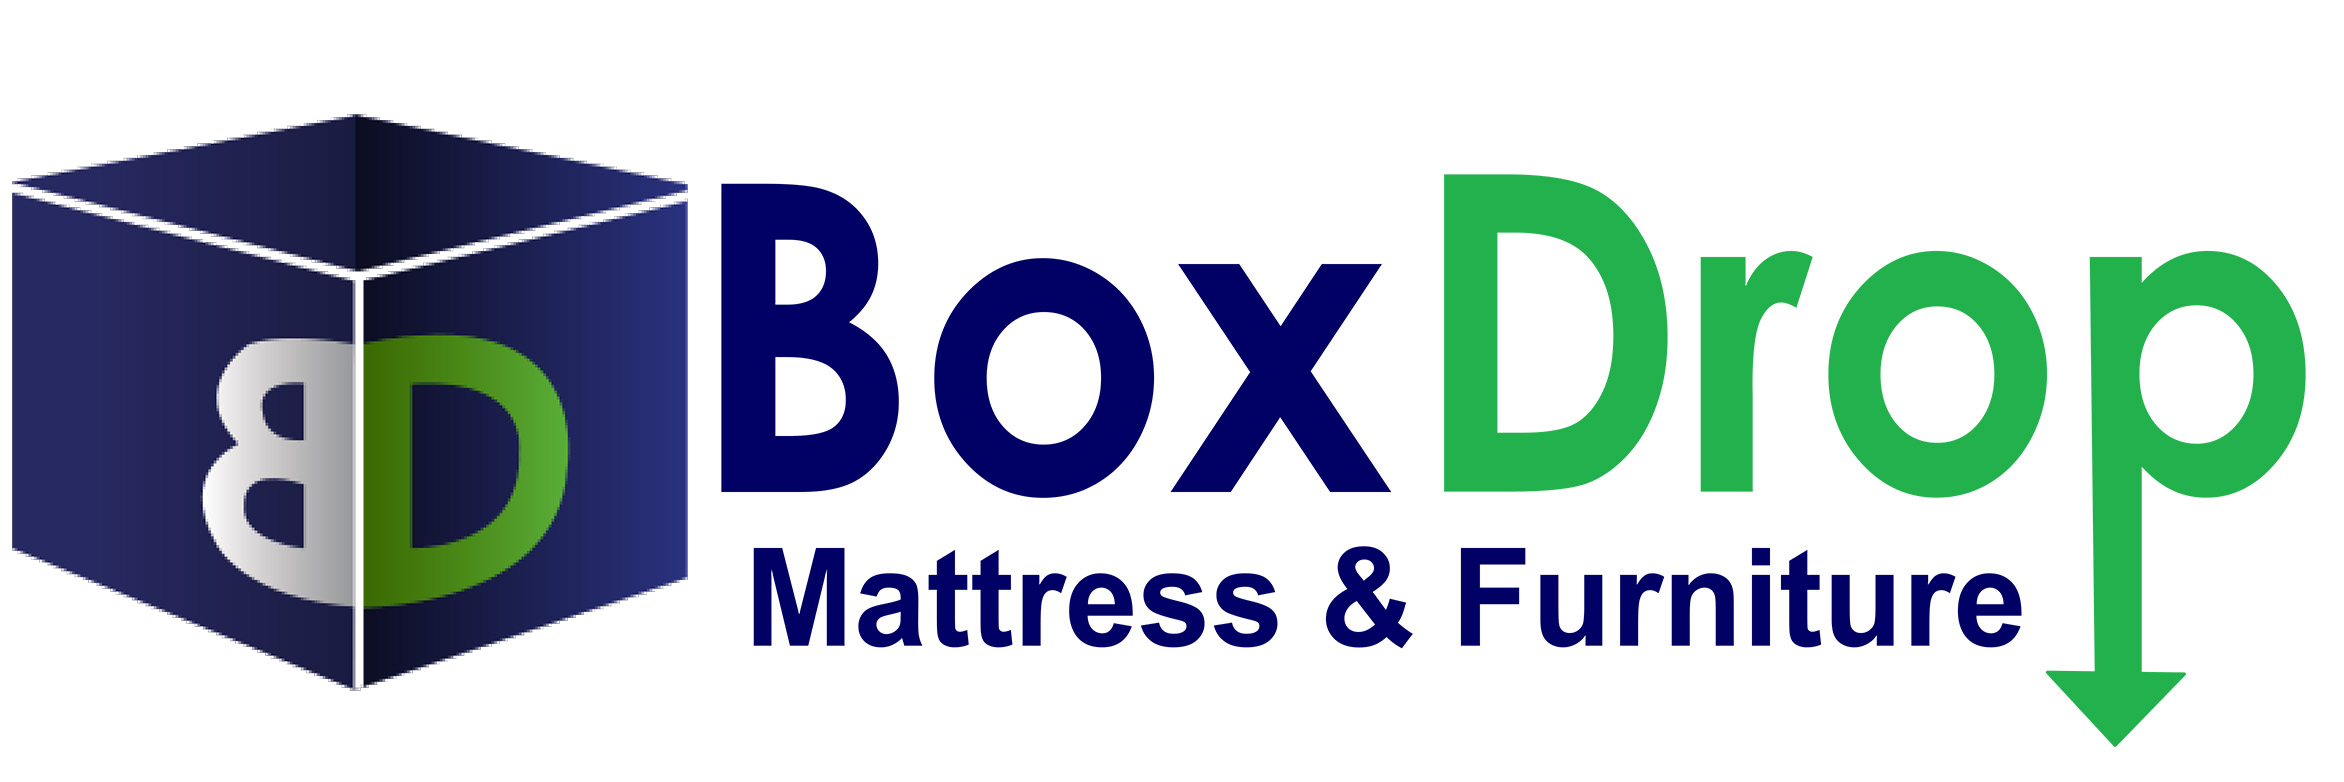 boxdrop furniture & mattress san diego